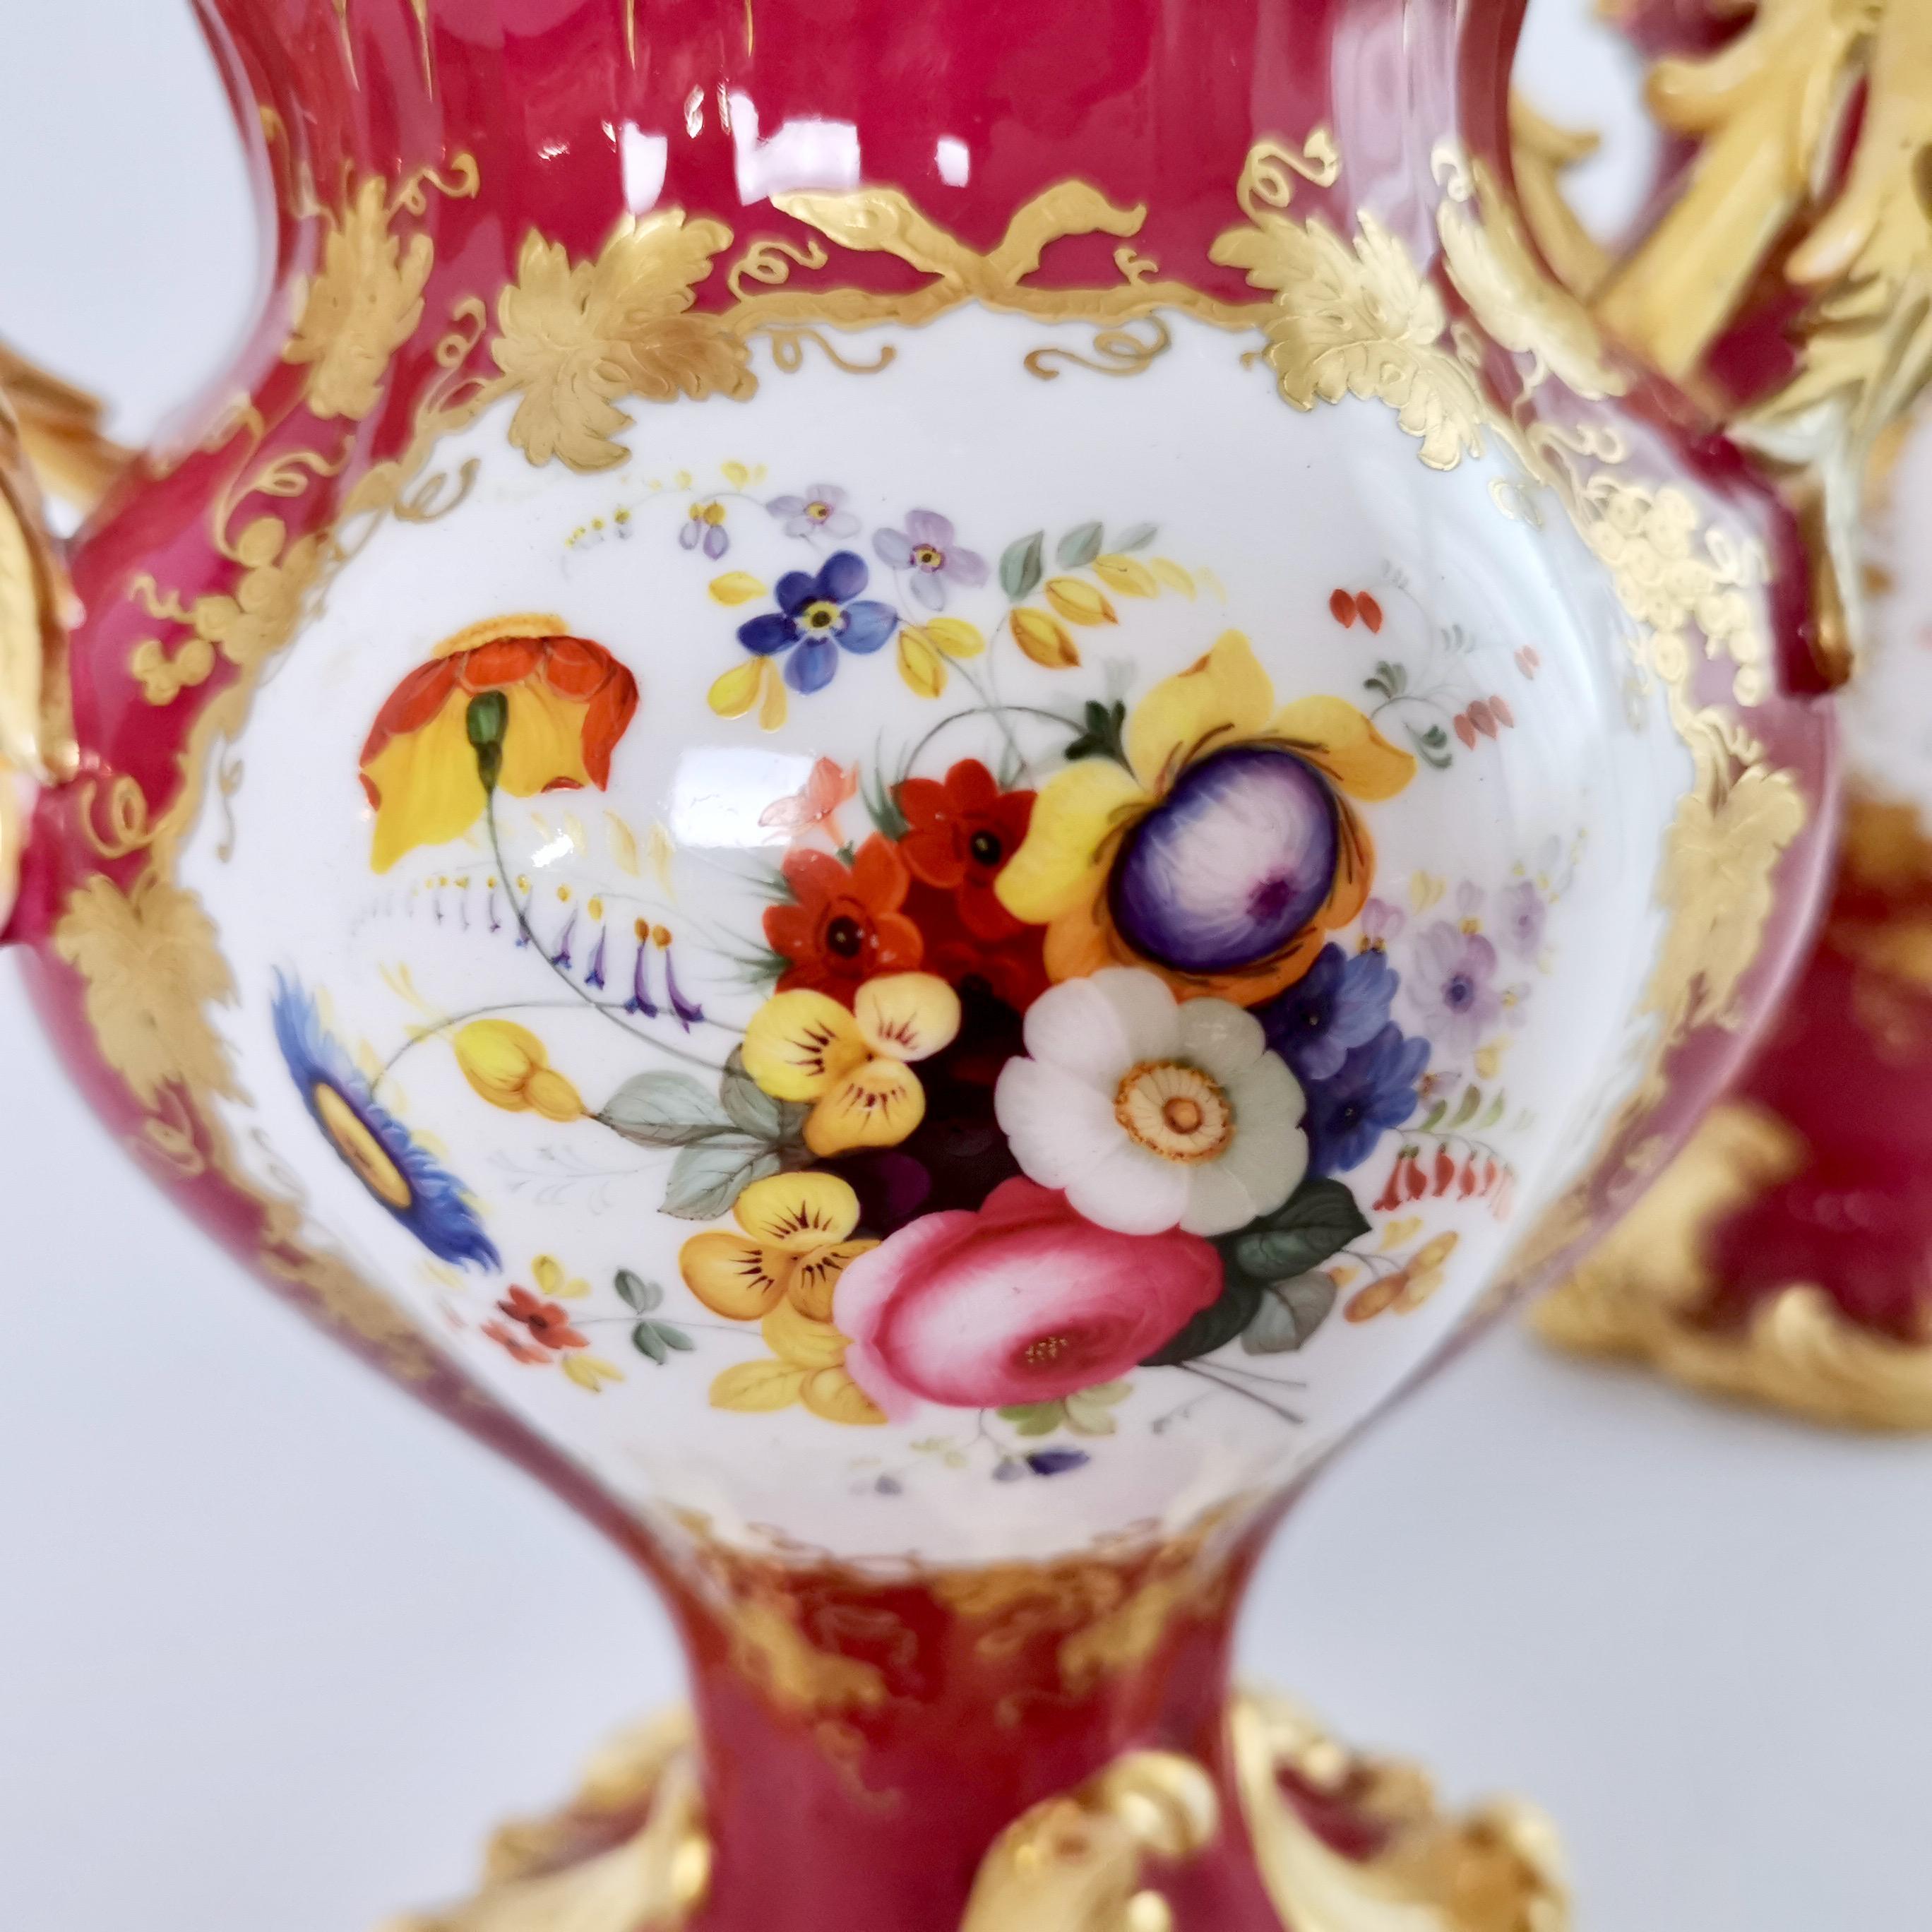 H&R Daniel Pair of Potpourri Vases, Maroon, Birds, Flowers, Rococo Revival c1840 For Sale 1